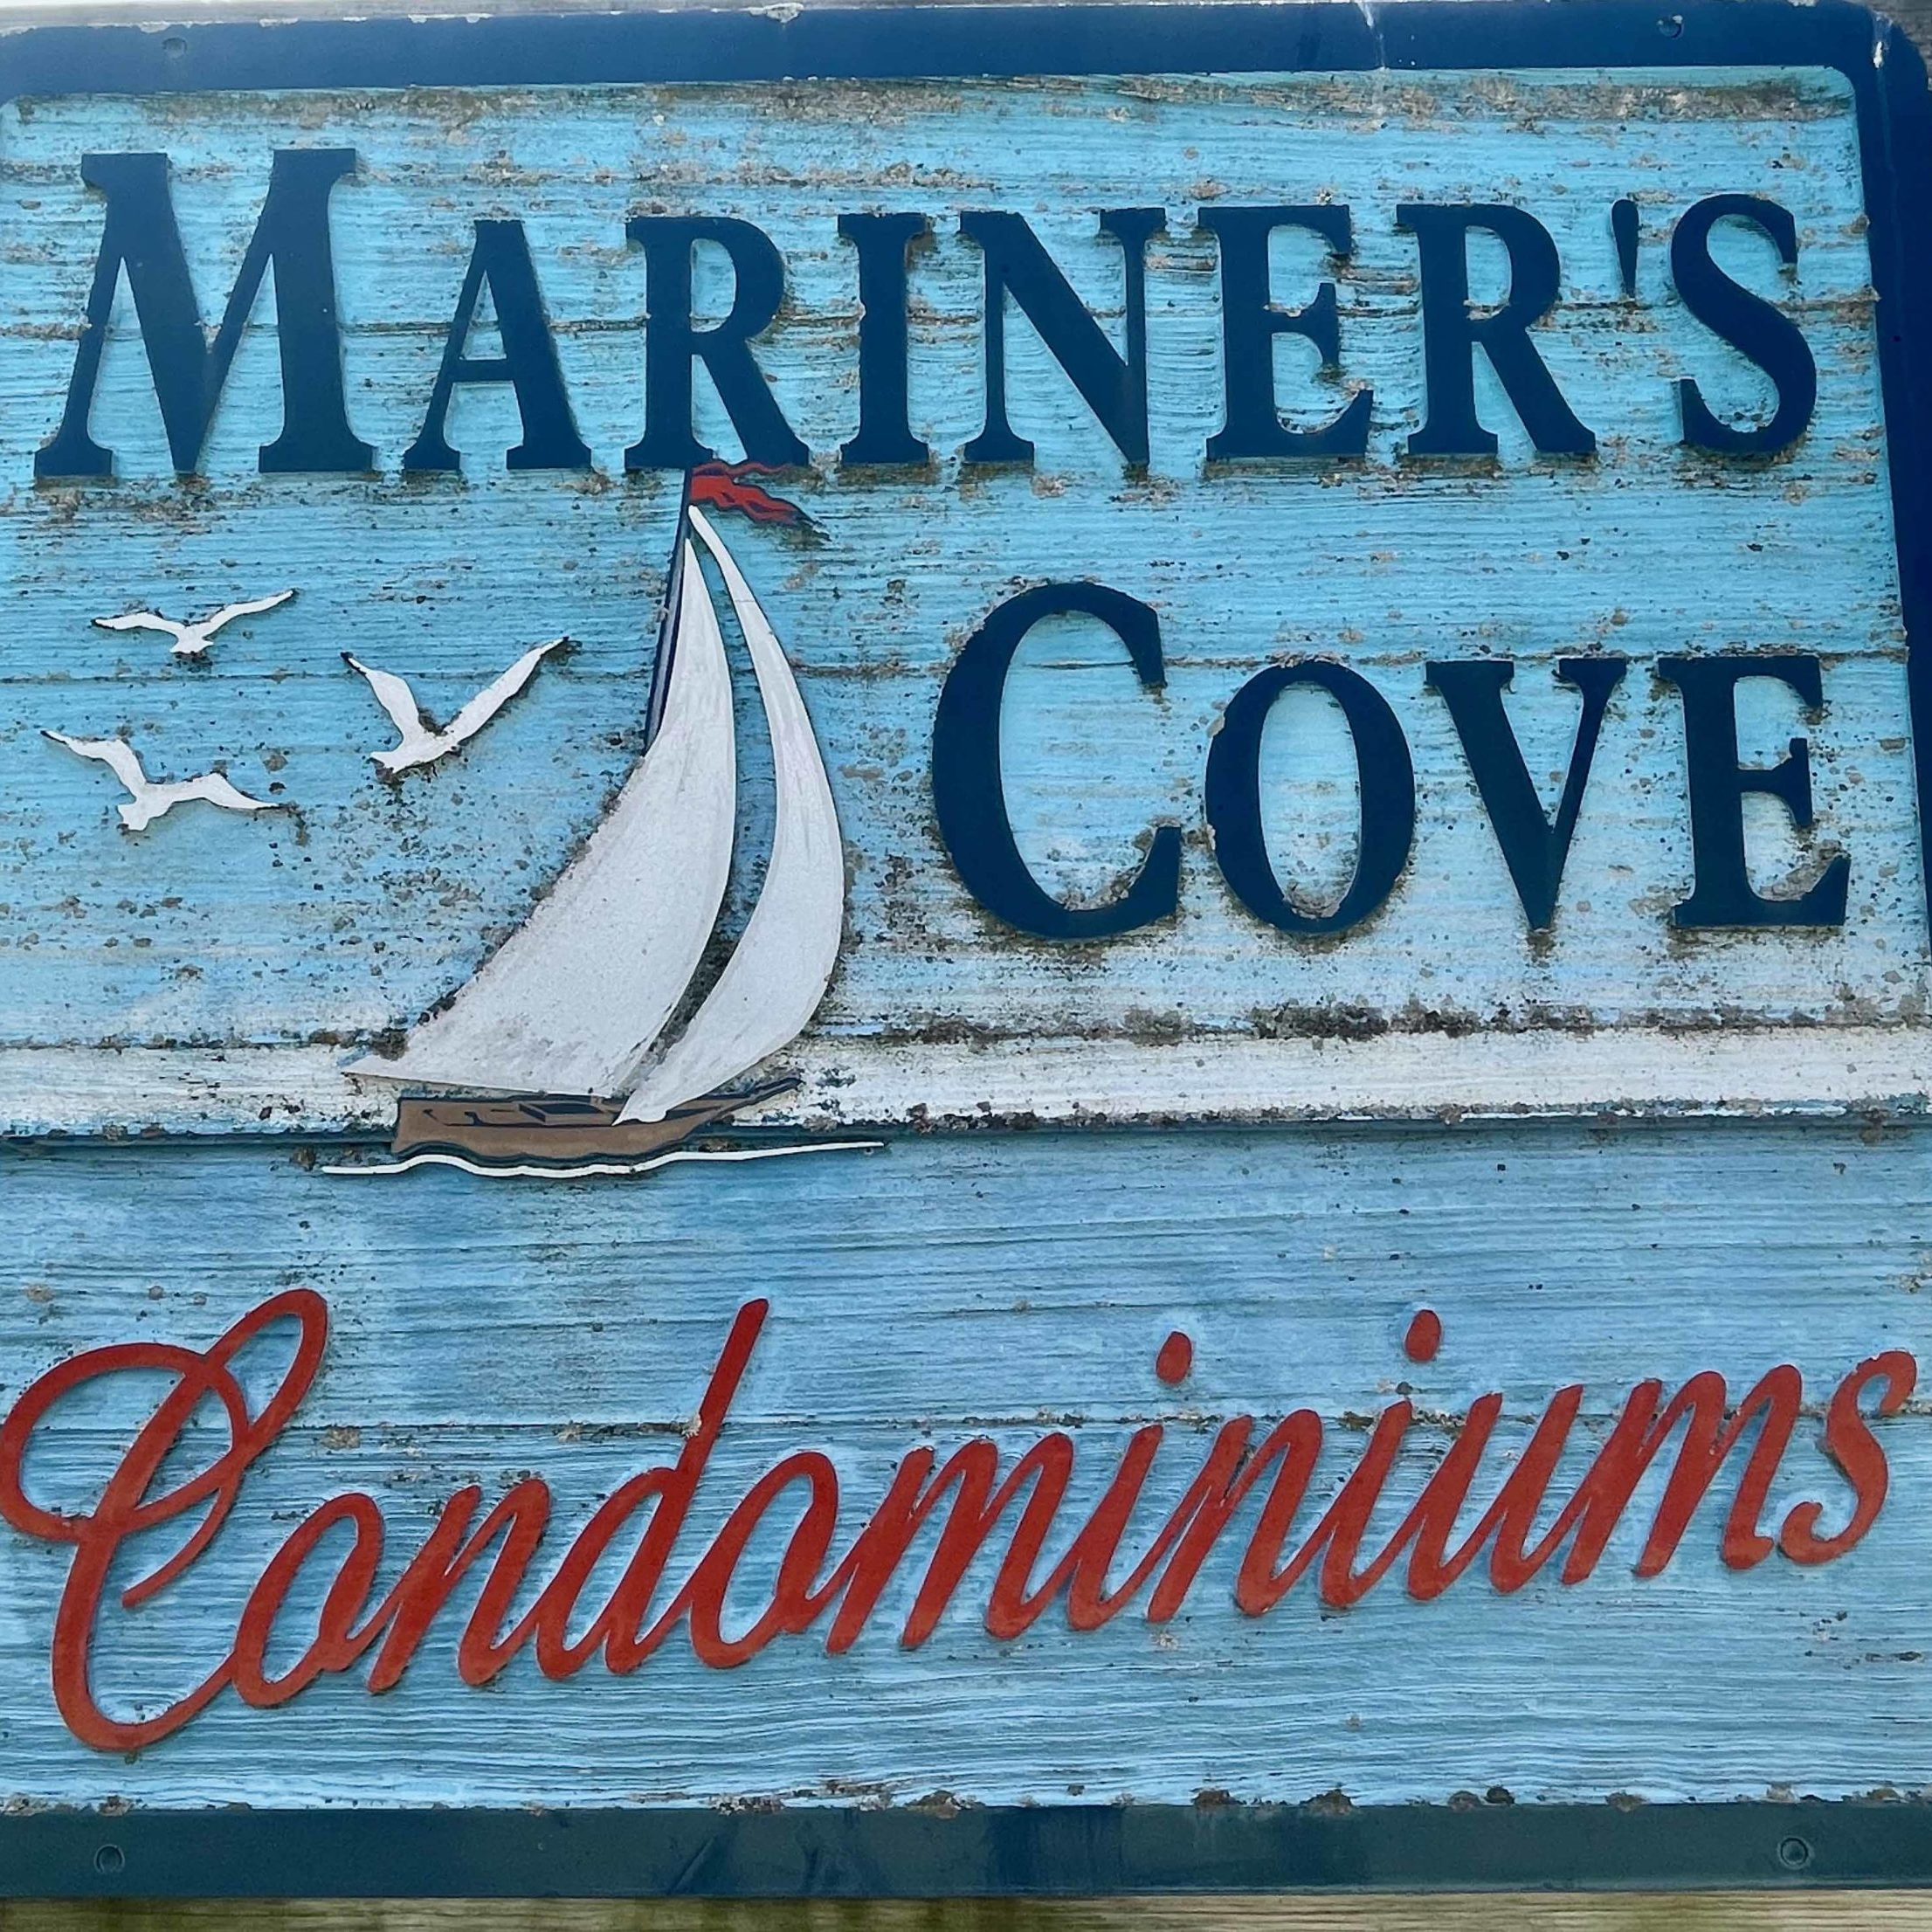 Mariners Cover Condos